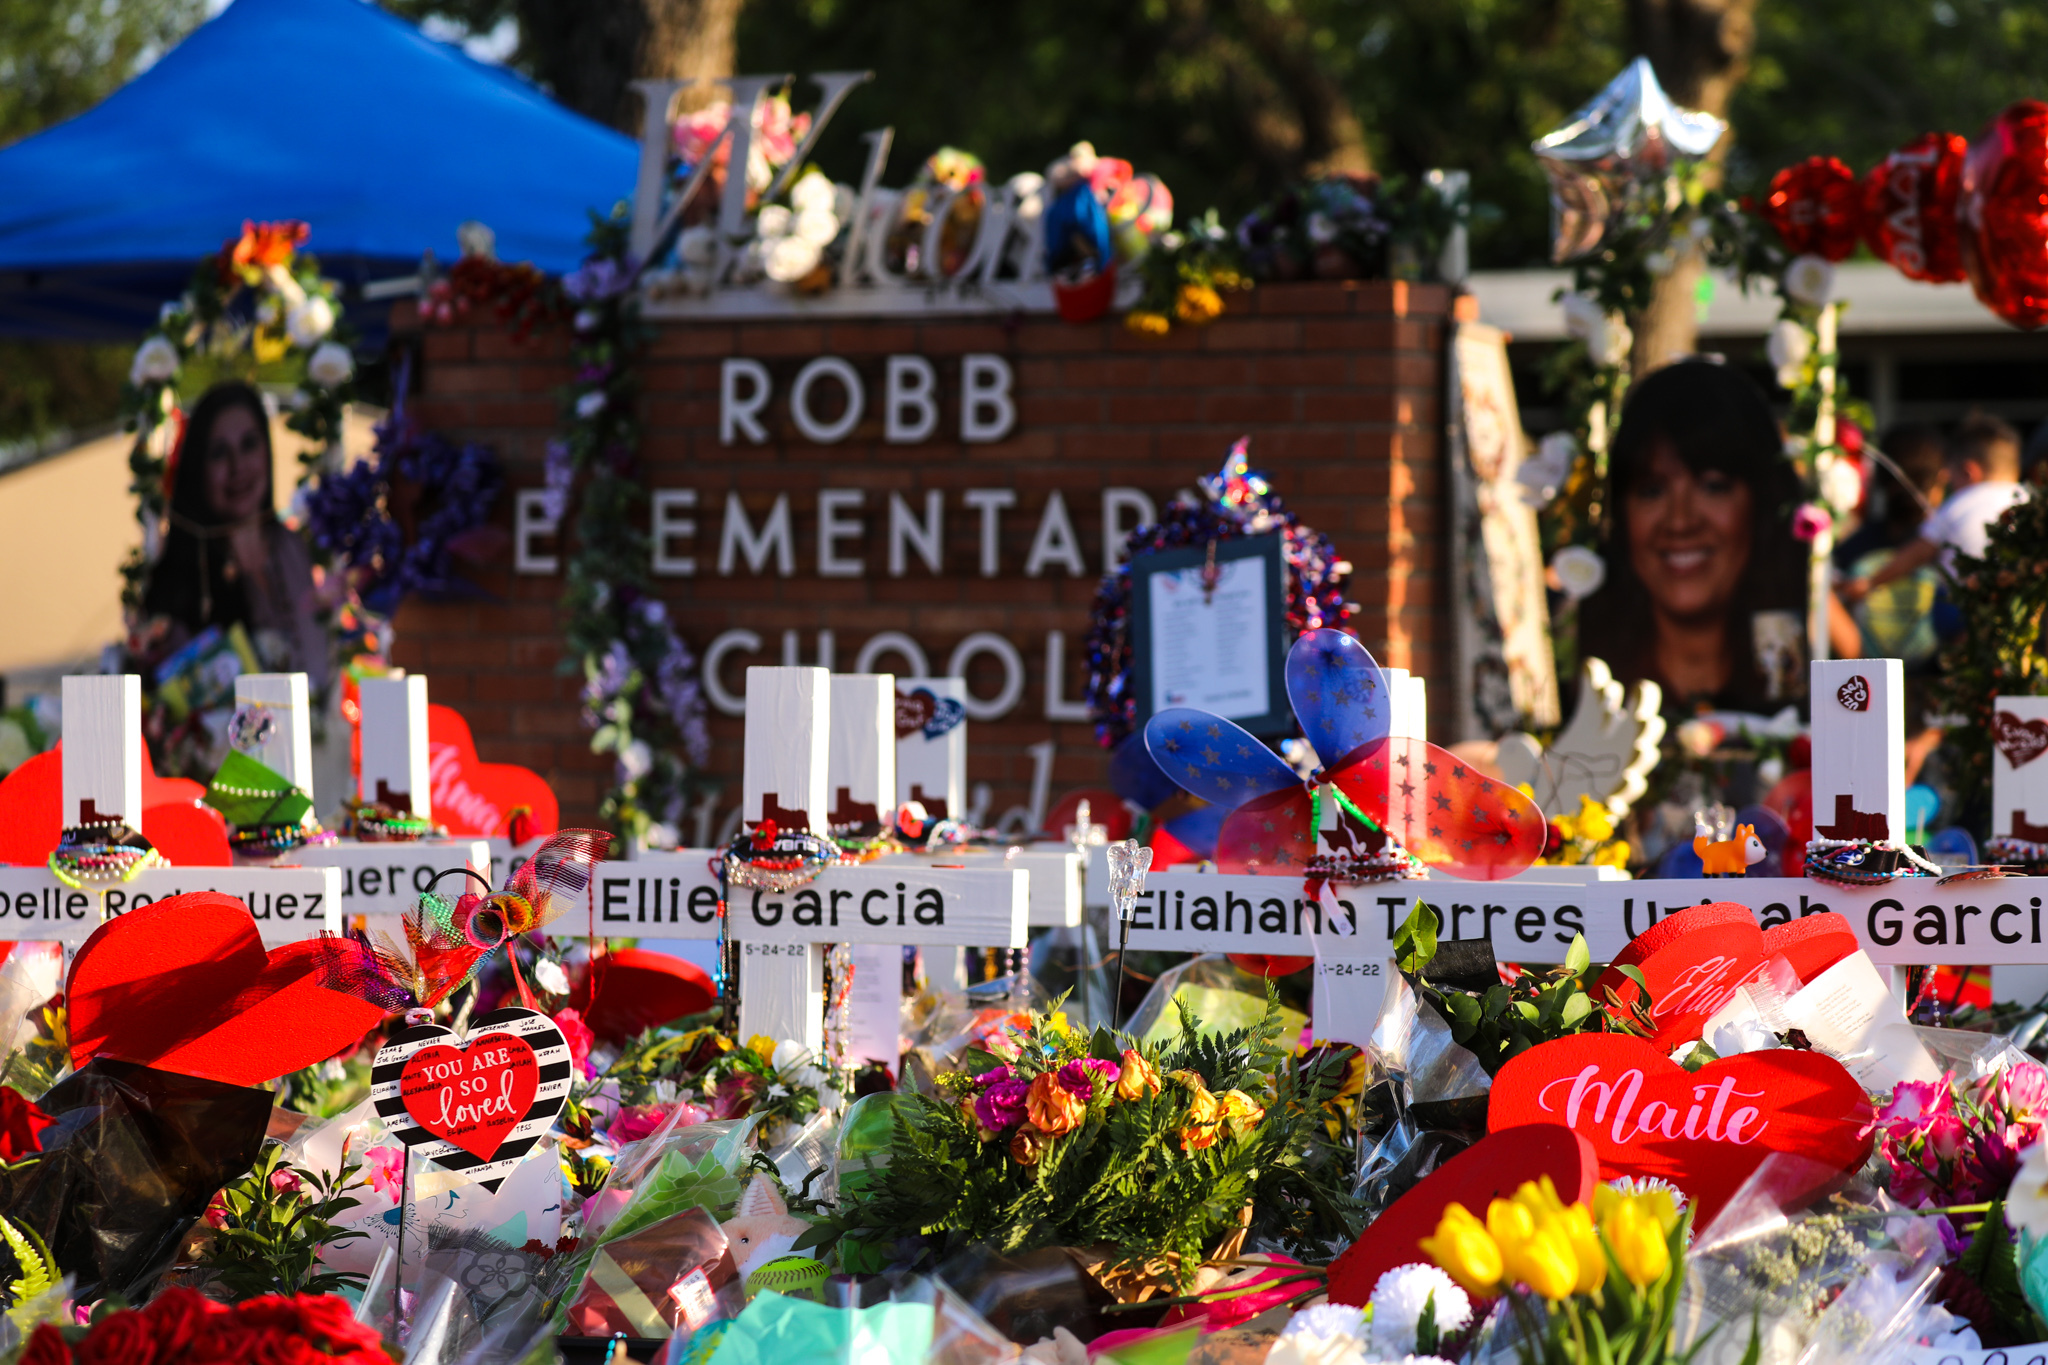 A memorial outside Robb Elementary School